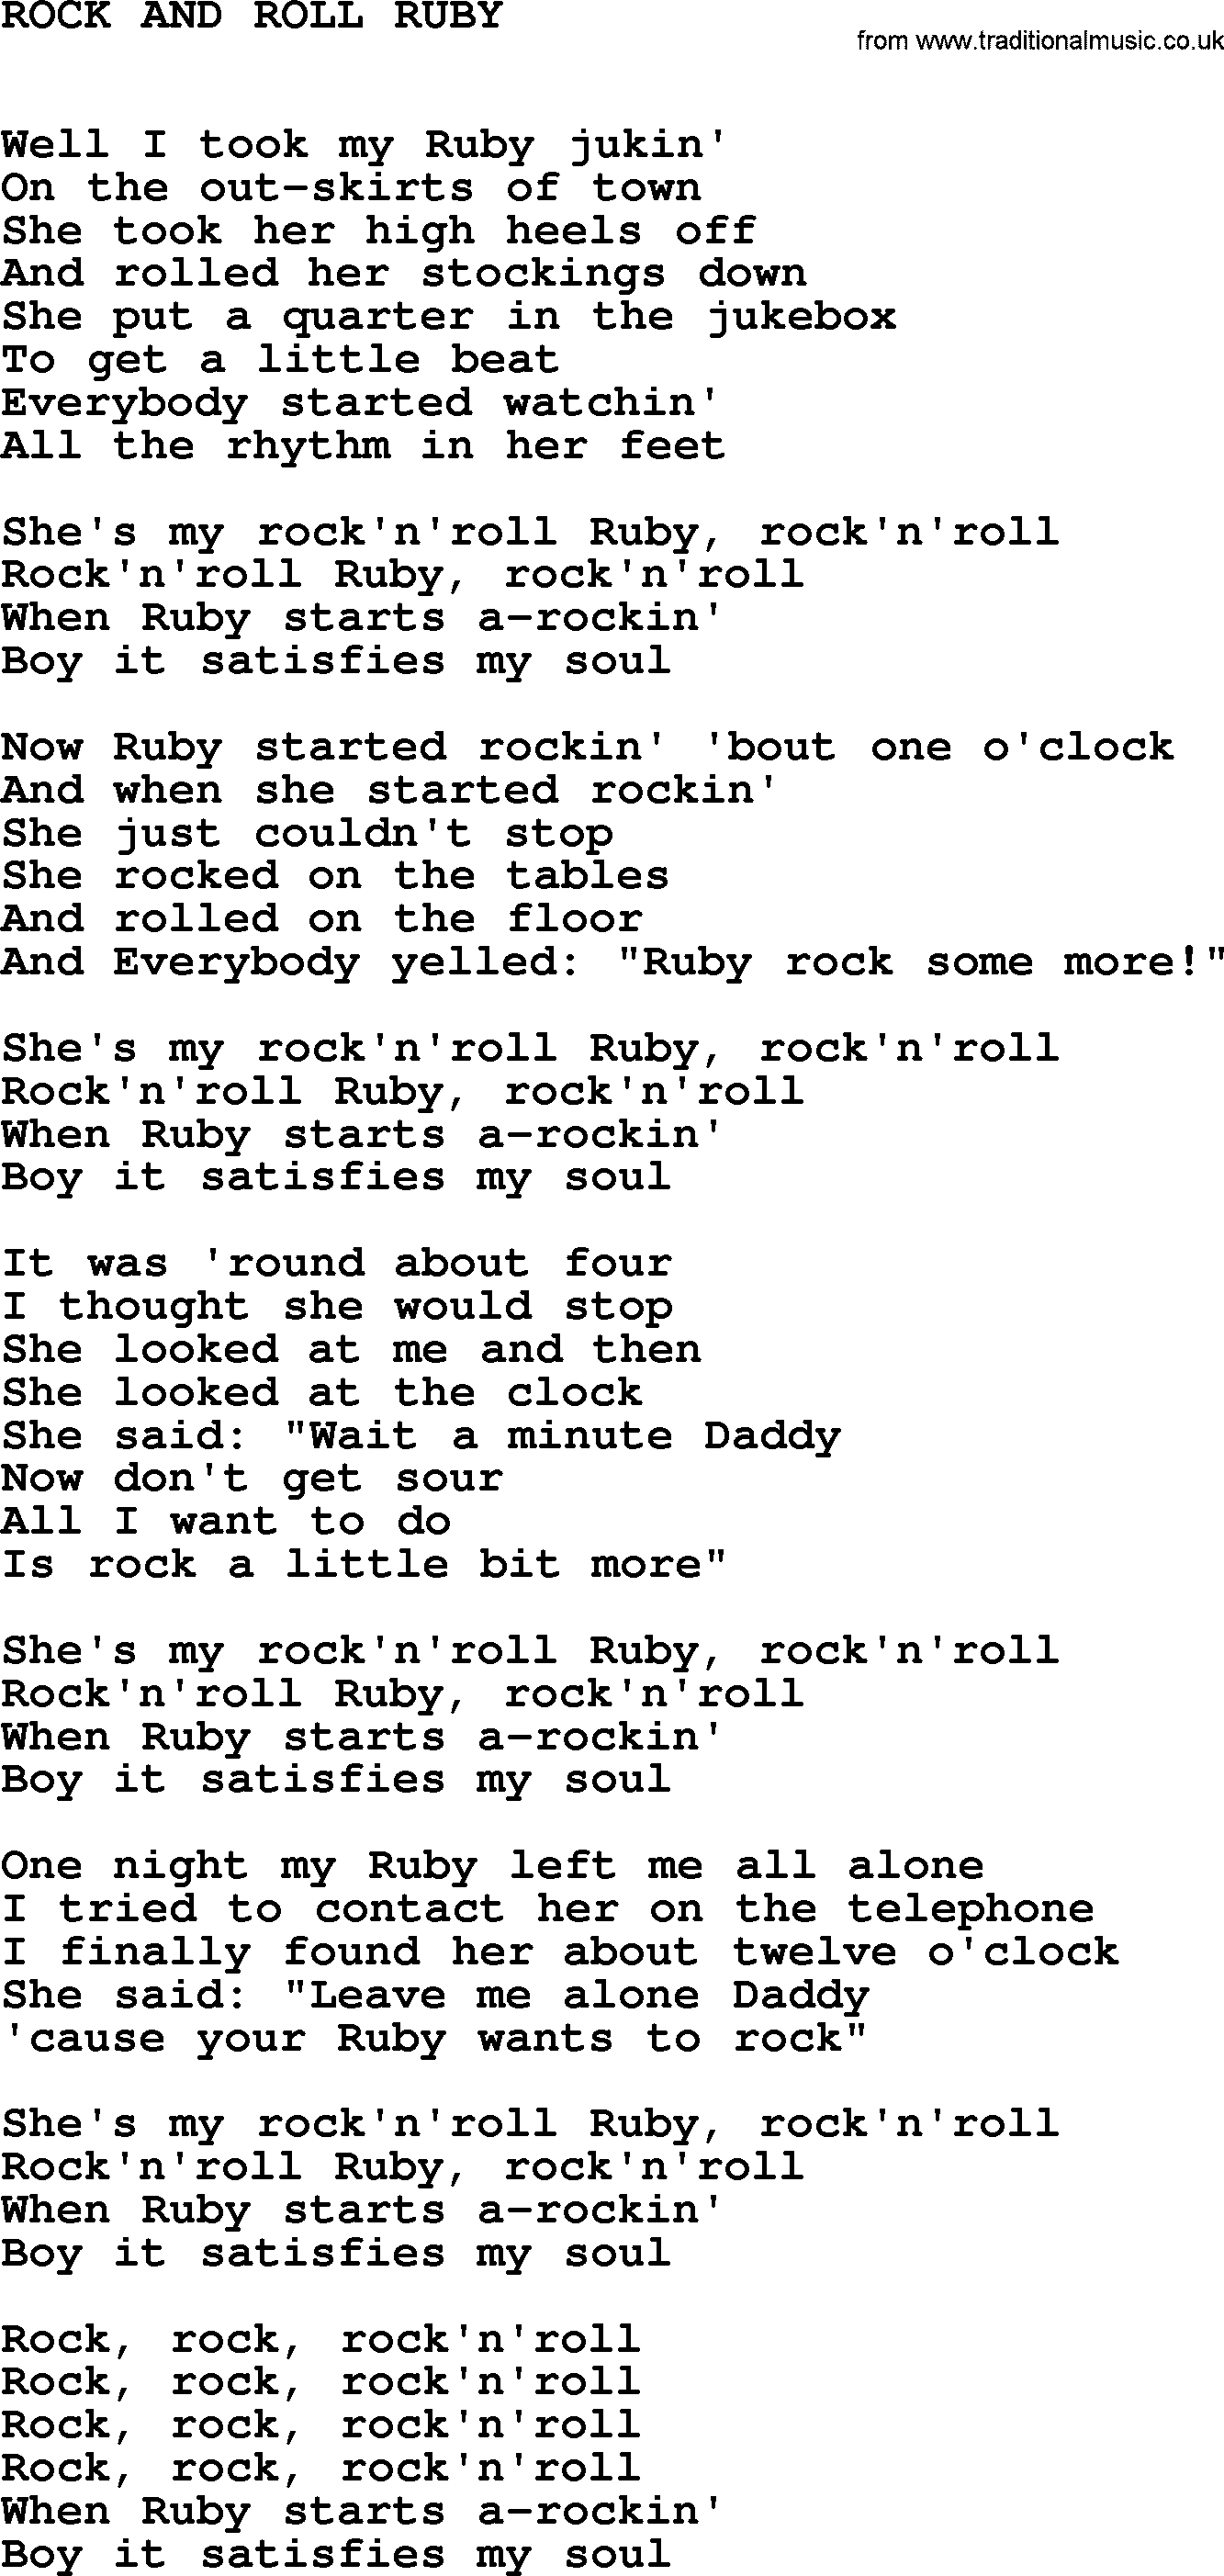 Johnny Cash song Rock And Roll Ruby.txt lyrics